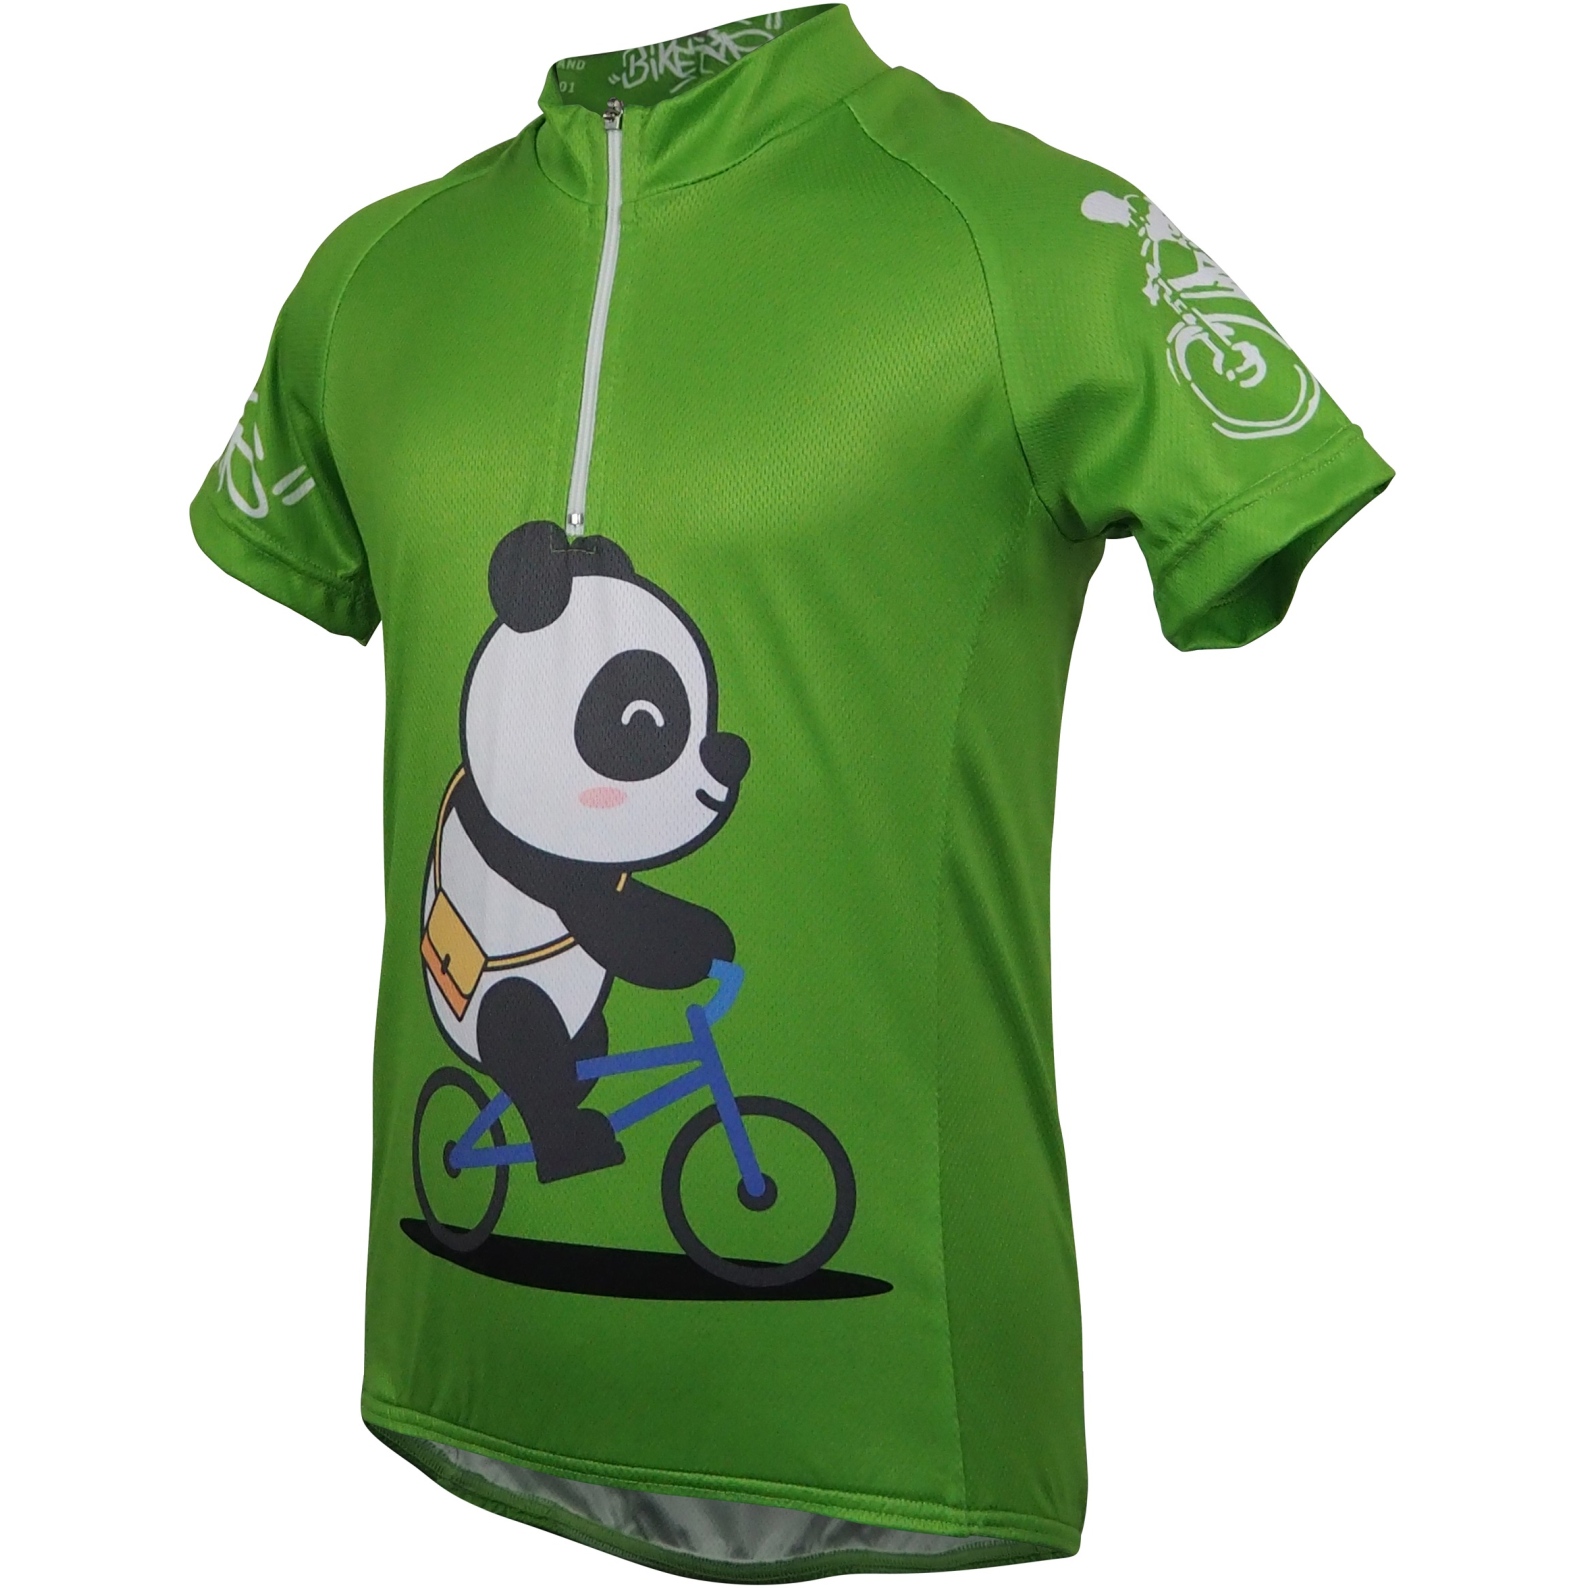 Image of Biketags Cycling Jersey Kids - Panda Green